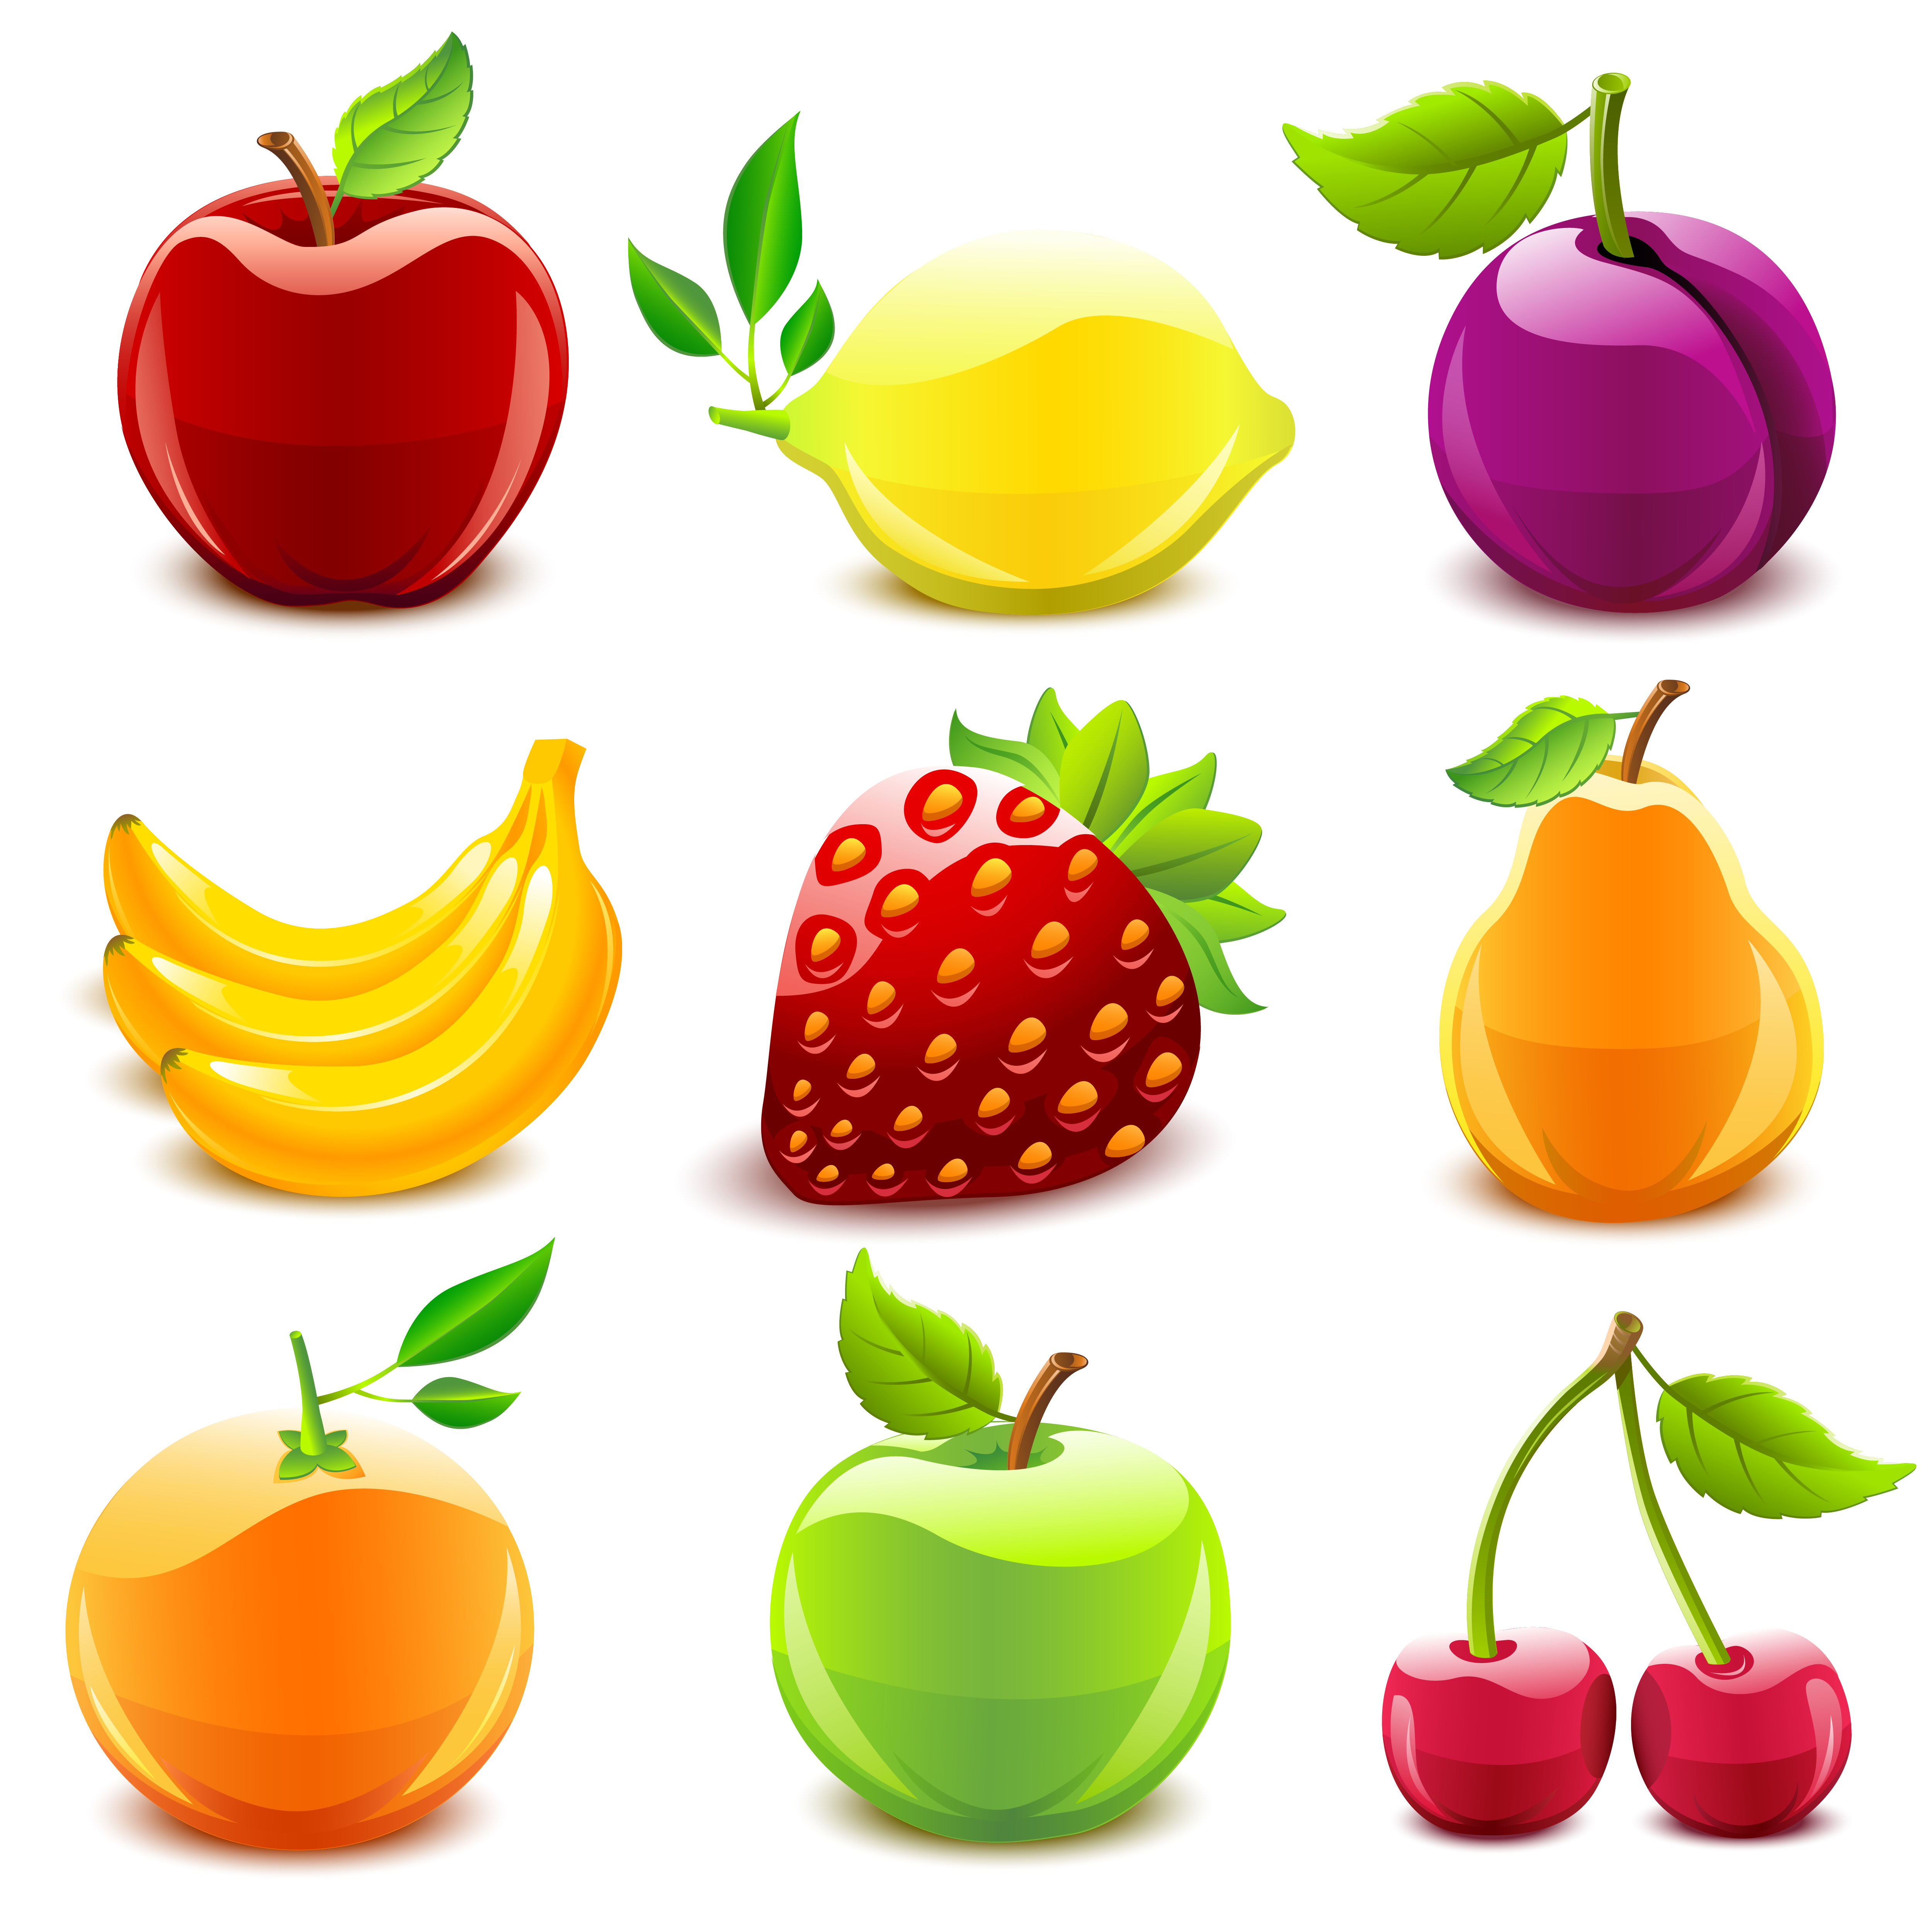 Fruit illustration apples bananas. Mango clipart strawberry banana